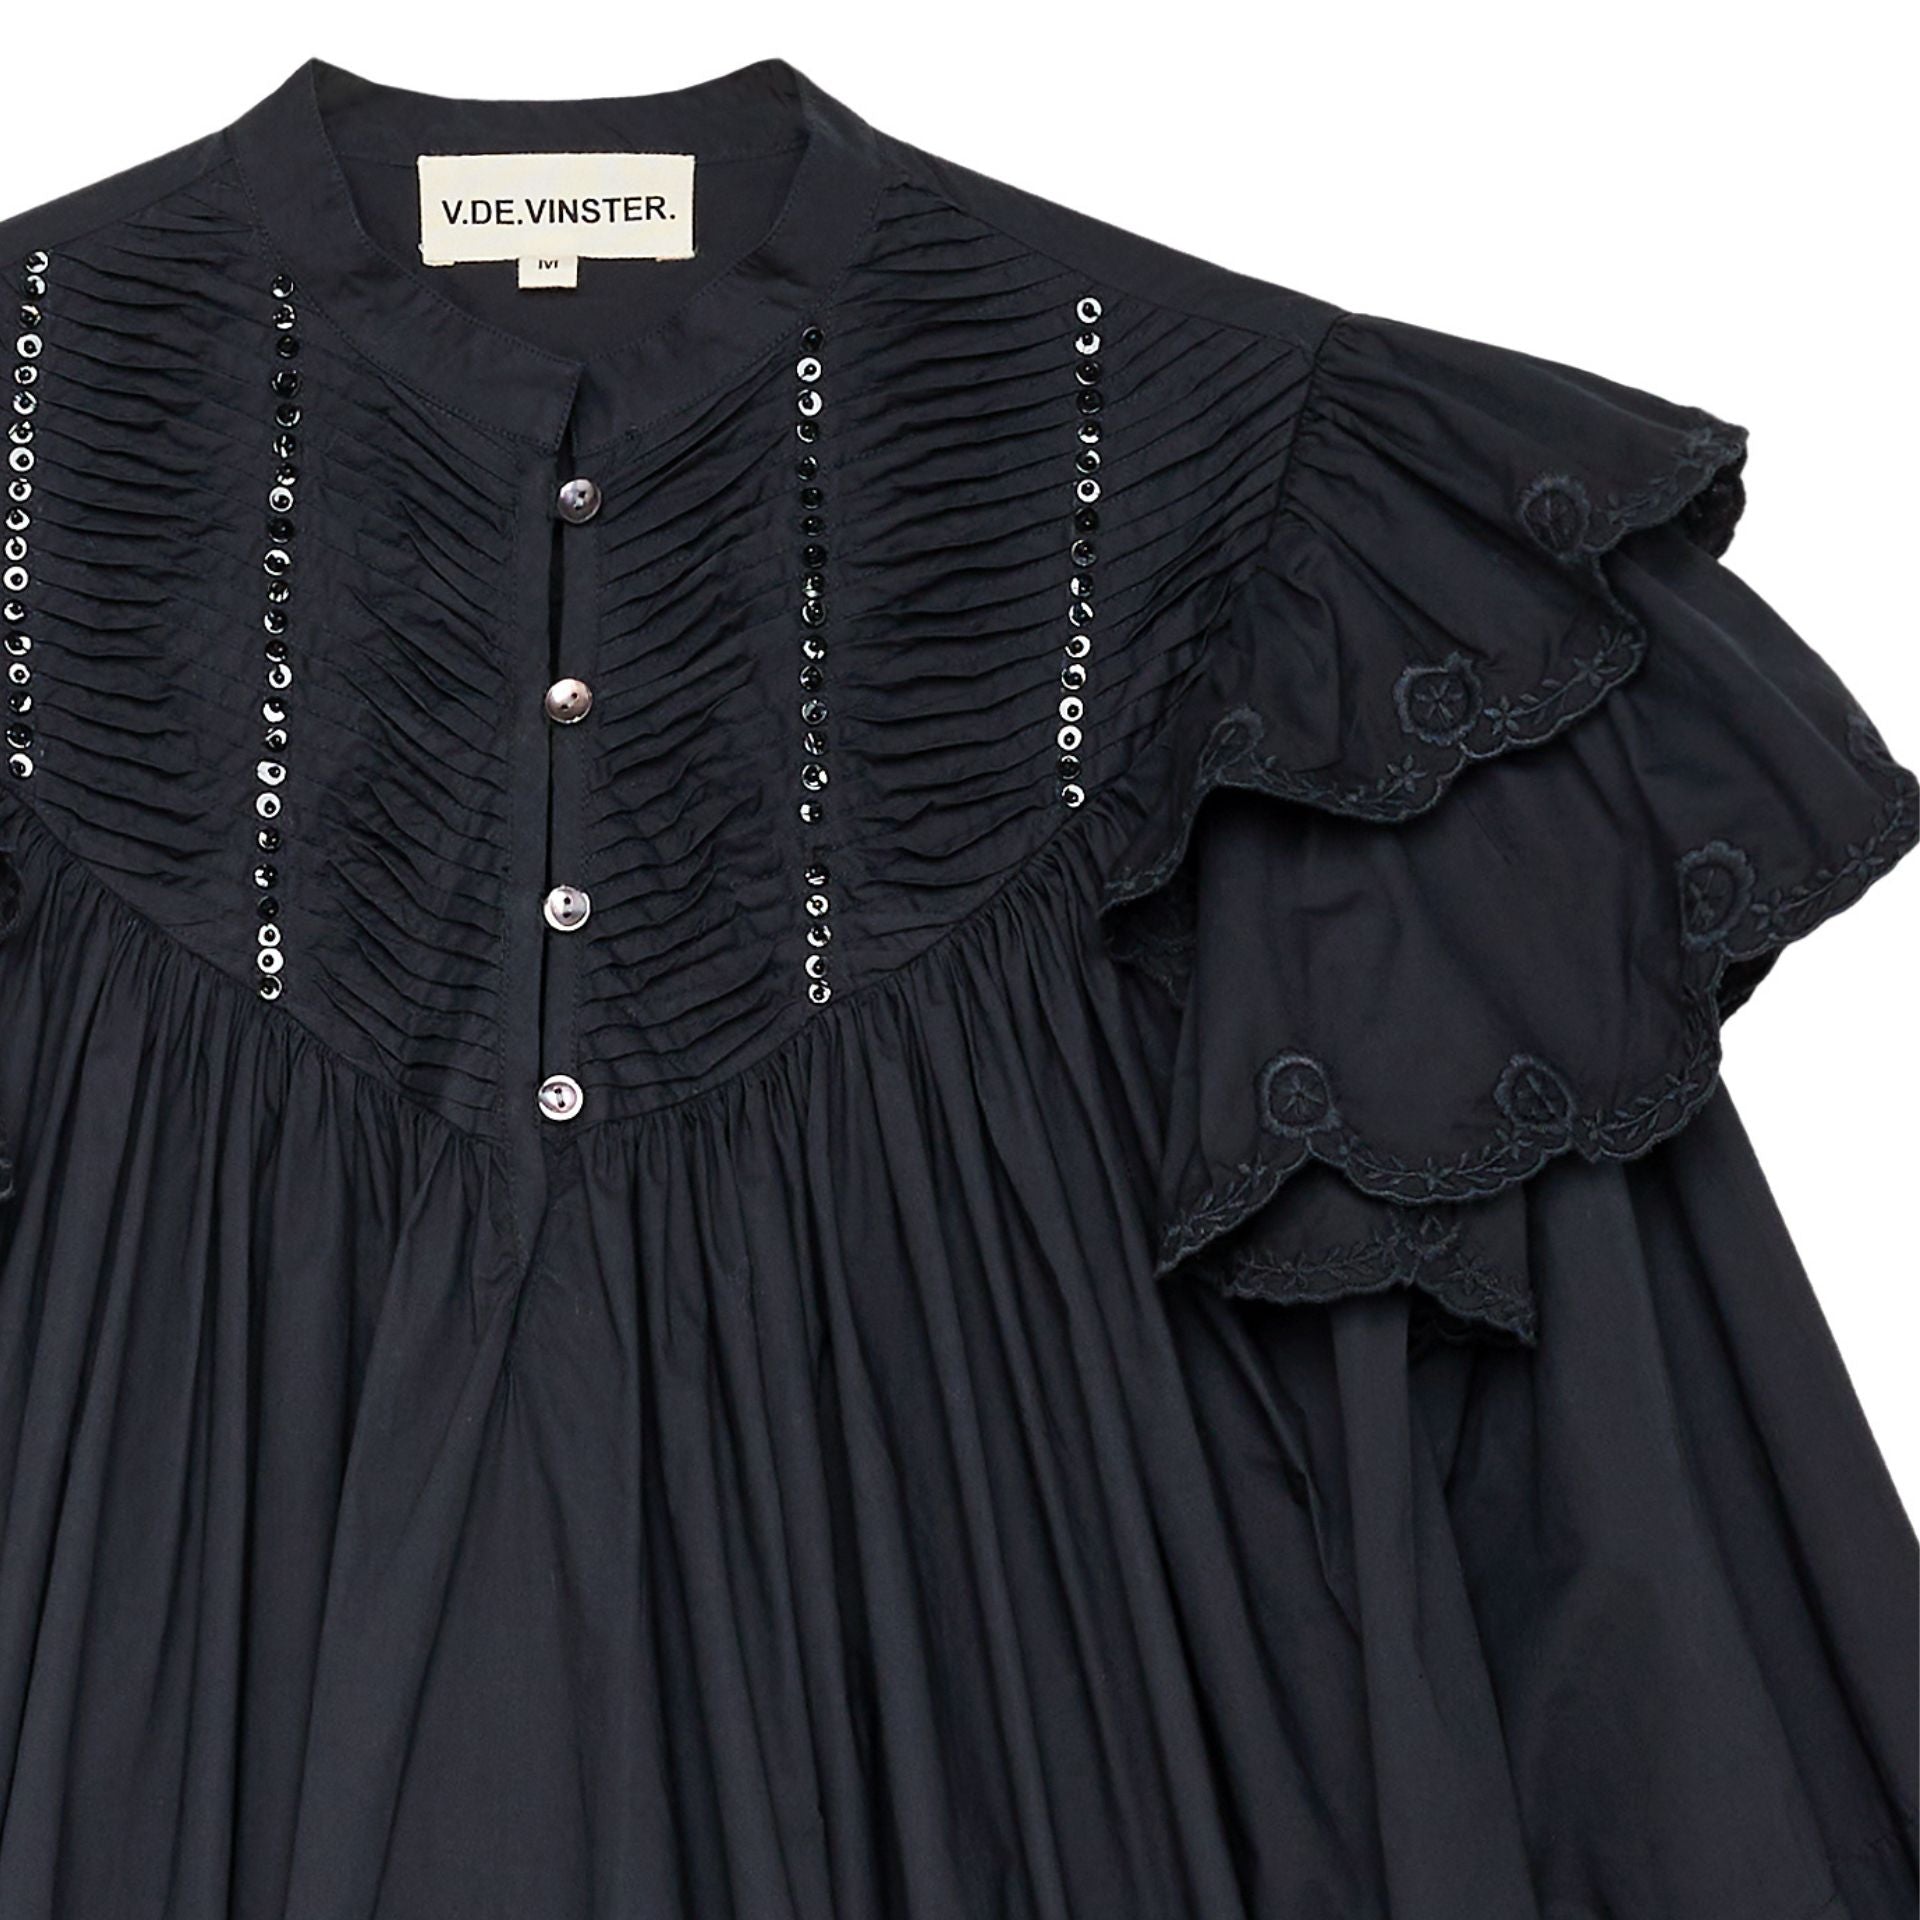 Chloé bohemian black ruffled blouse